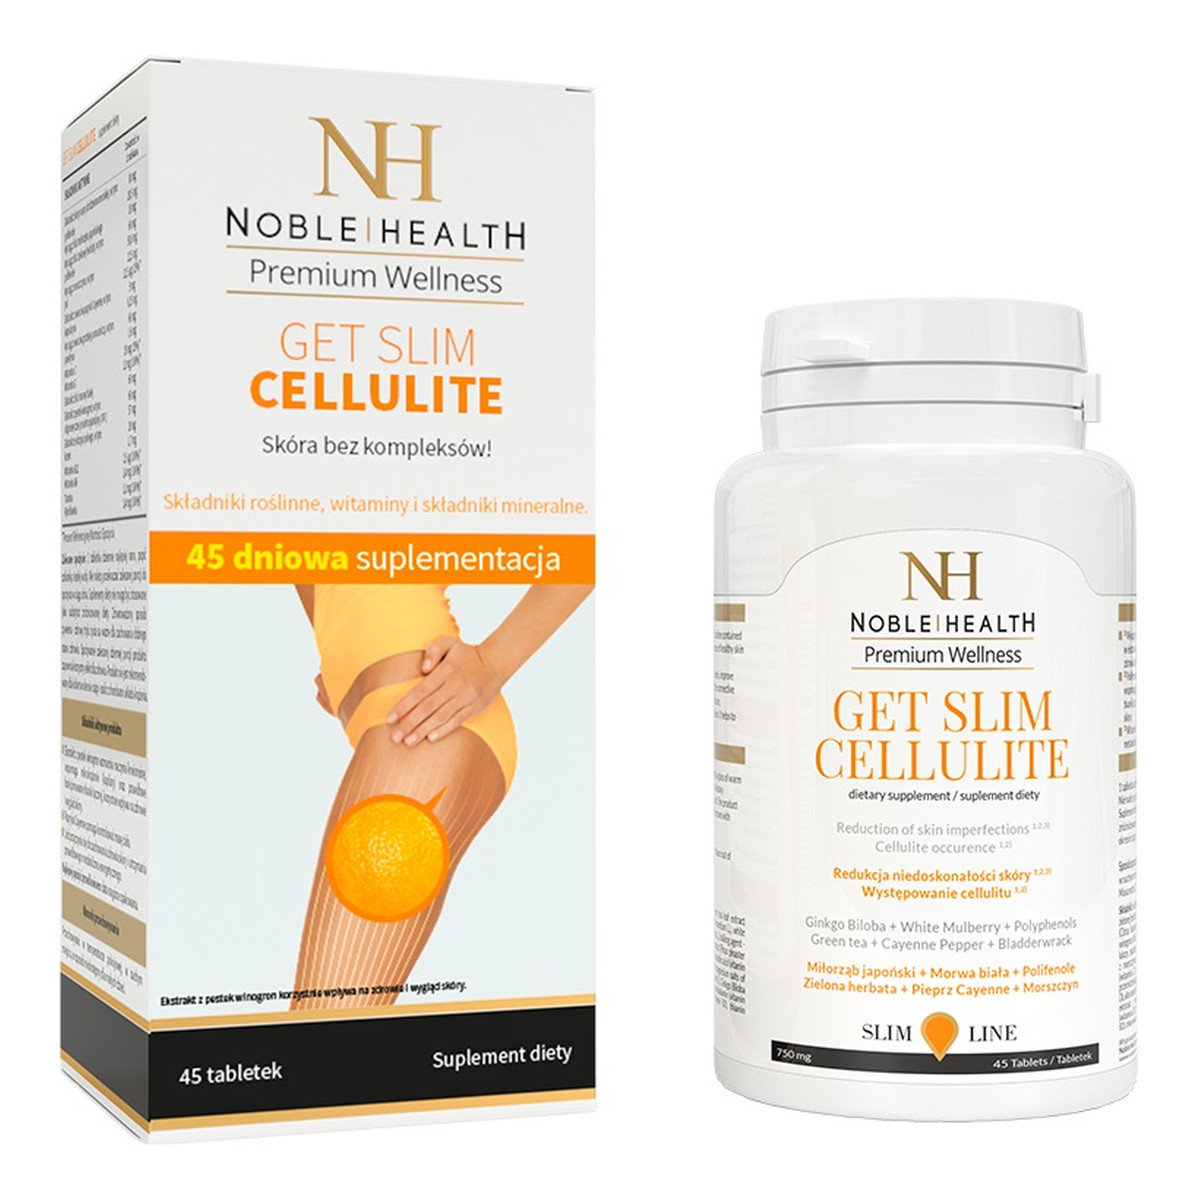 Noble Health Premium Wellness Get Slim Cellulite tabletki redukujące cellulit 45 tabletek